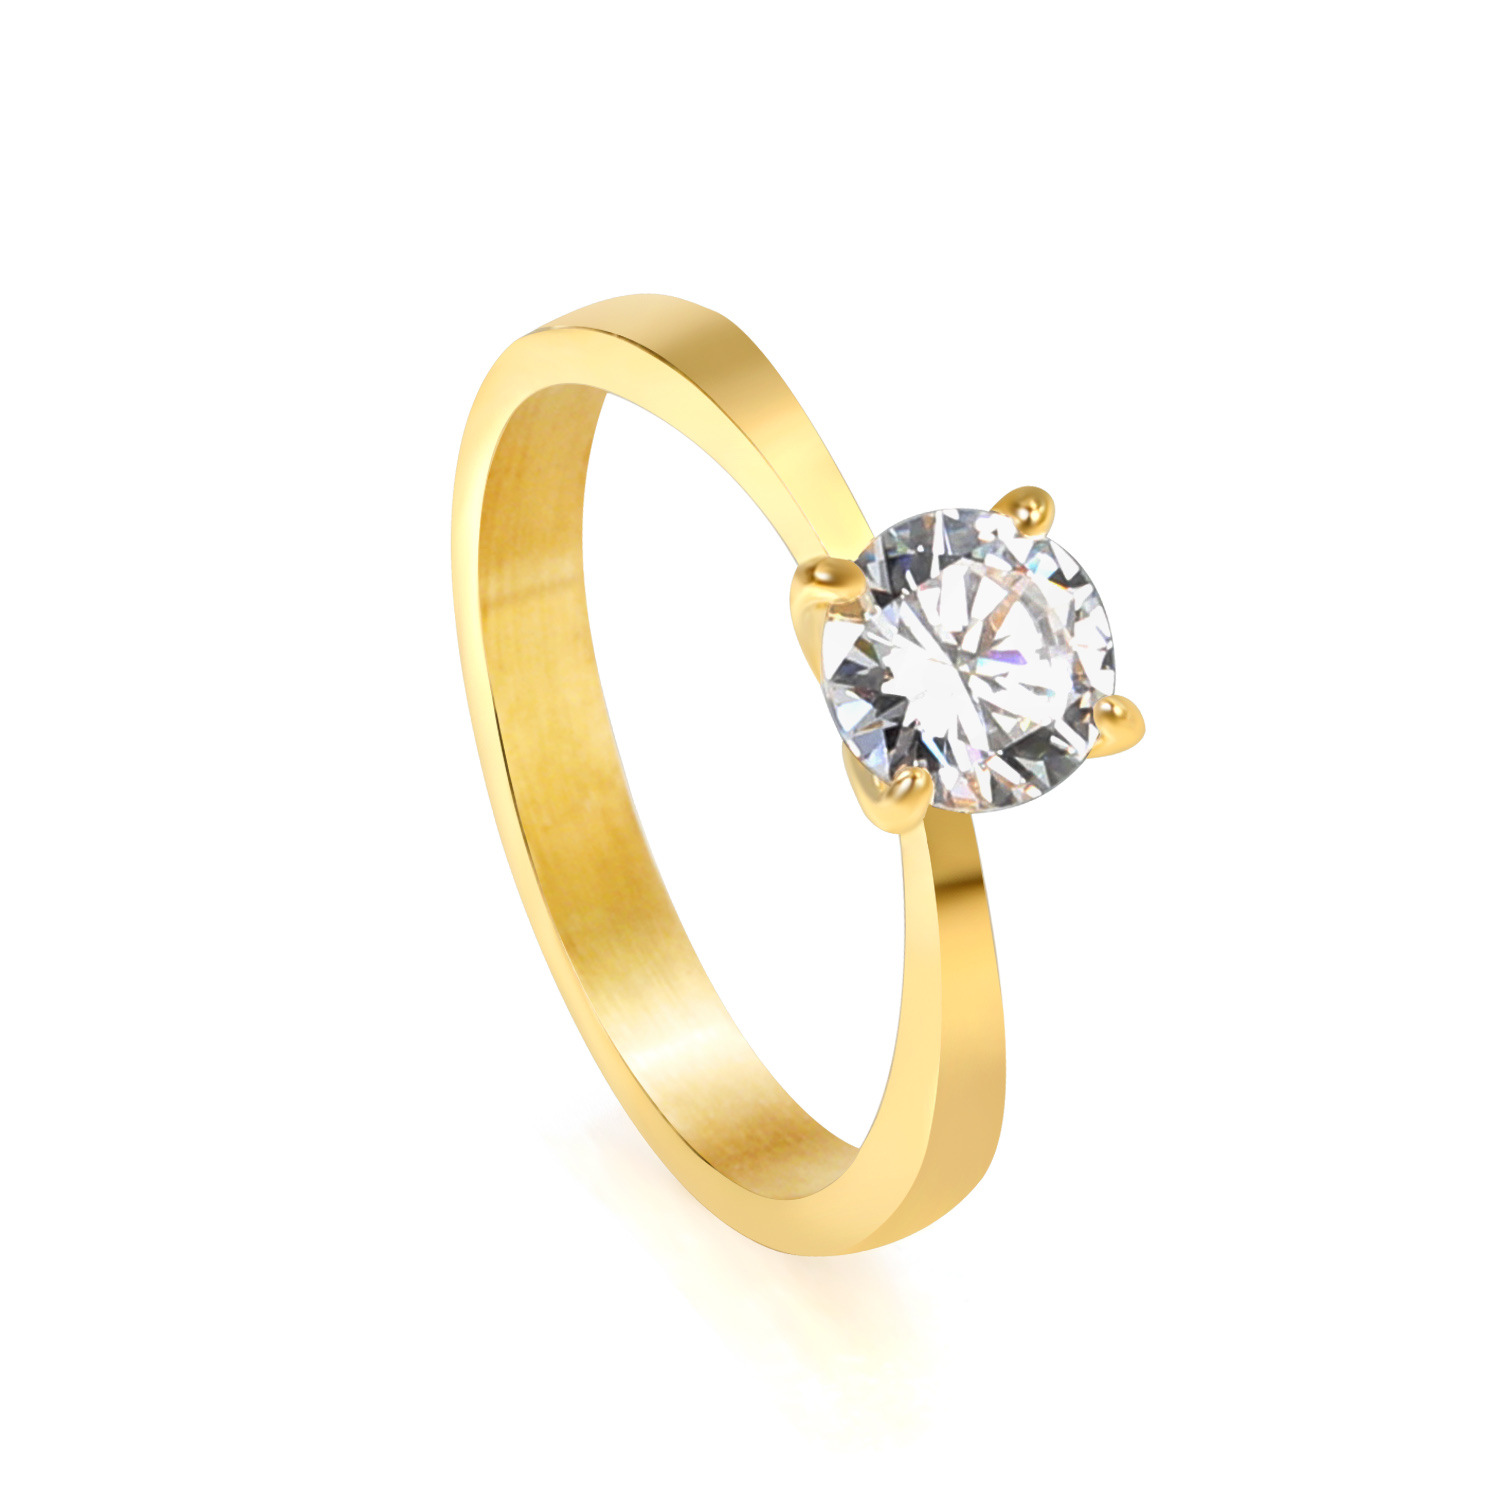 2:White diamond ring Gold RI1448A6-9G